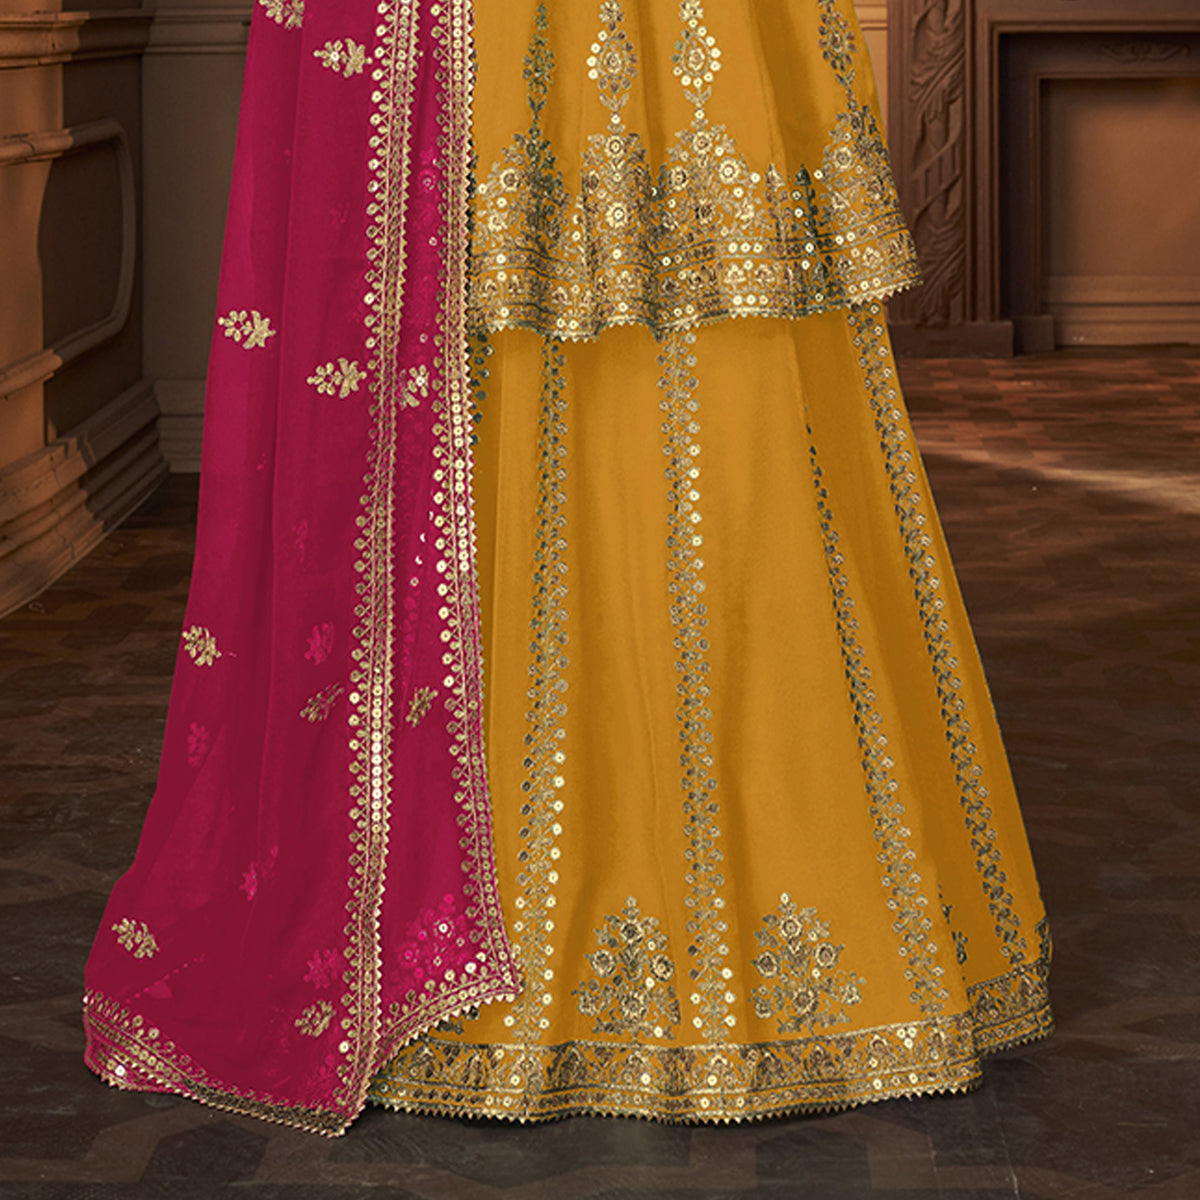 Shafnufab Yellow Indian Pakistani rich look georgette salwar kameez suit